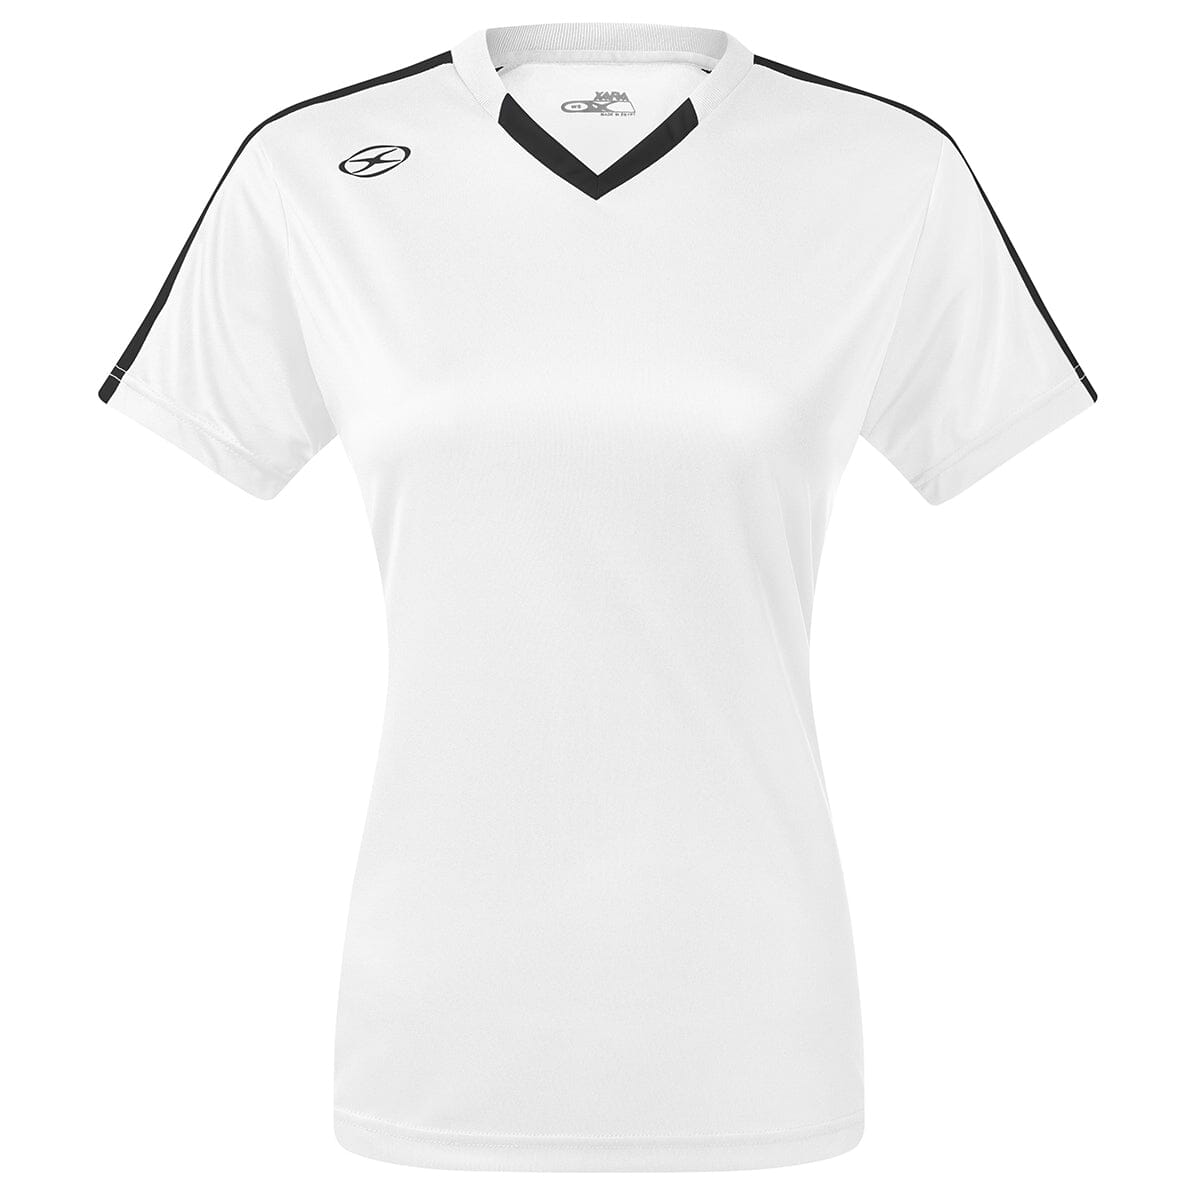 Britannia Jersey - Away Colors - Female Shirt Xara Soccer White/Black Womens Youth Large 